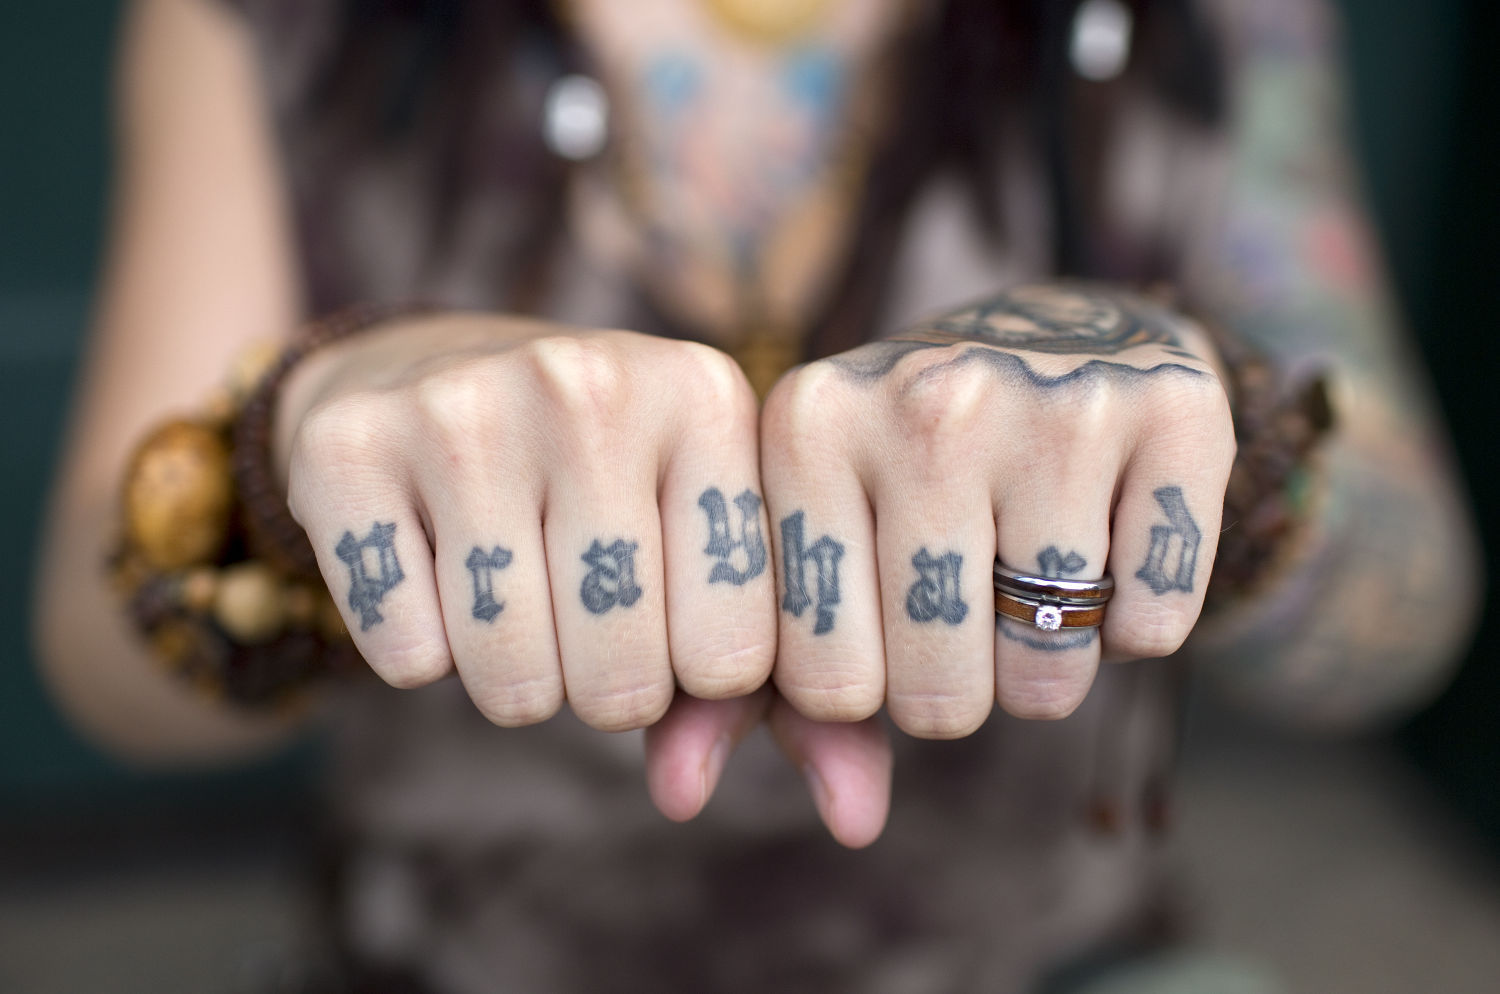 North carolina slut passed out tattoo